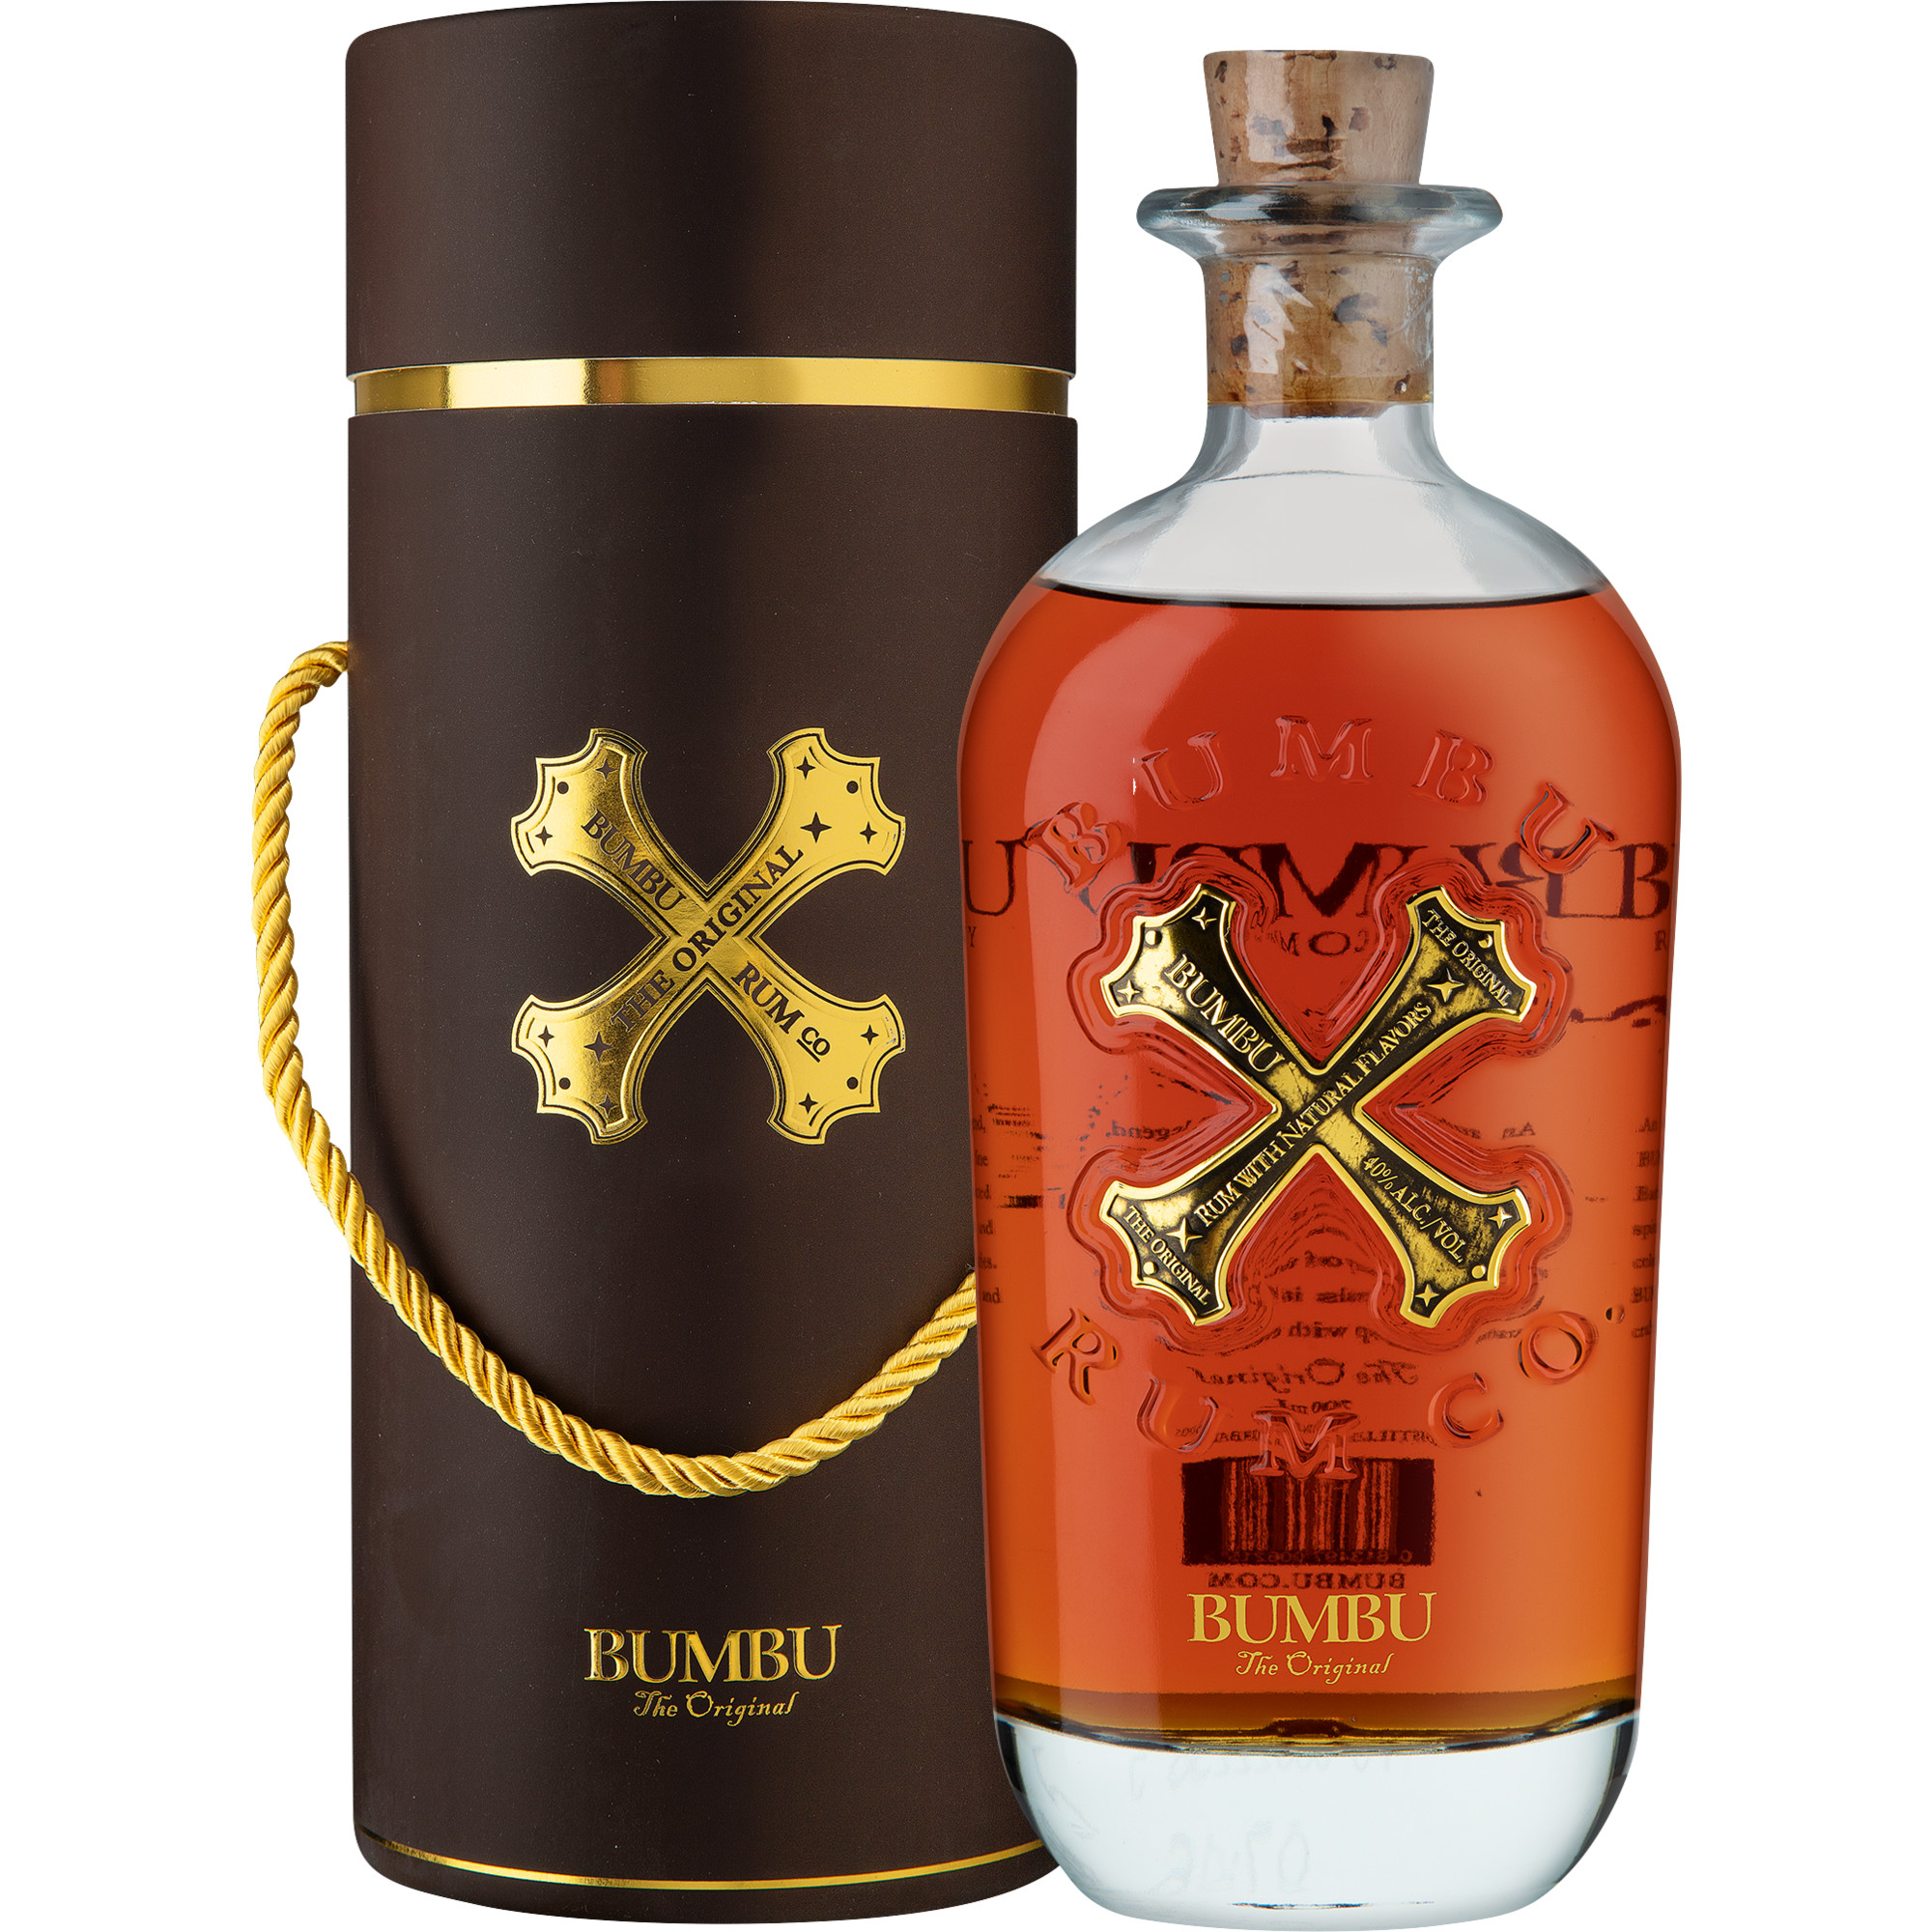 Bumbu Orignal Rum, Barbados, 0,7 L, 40% Vol. in Etui, Spirituosen  Spirituosen Hawesko